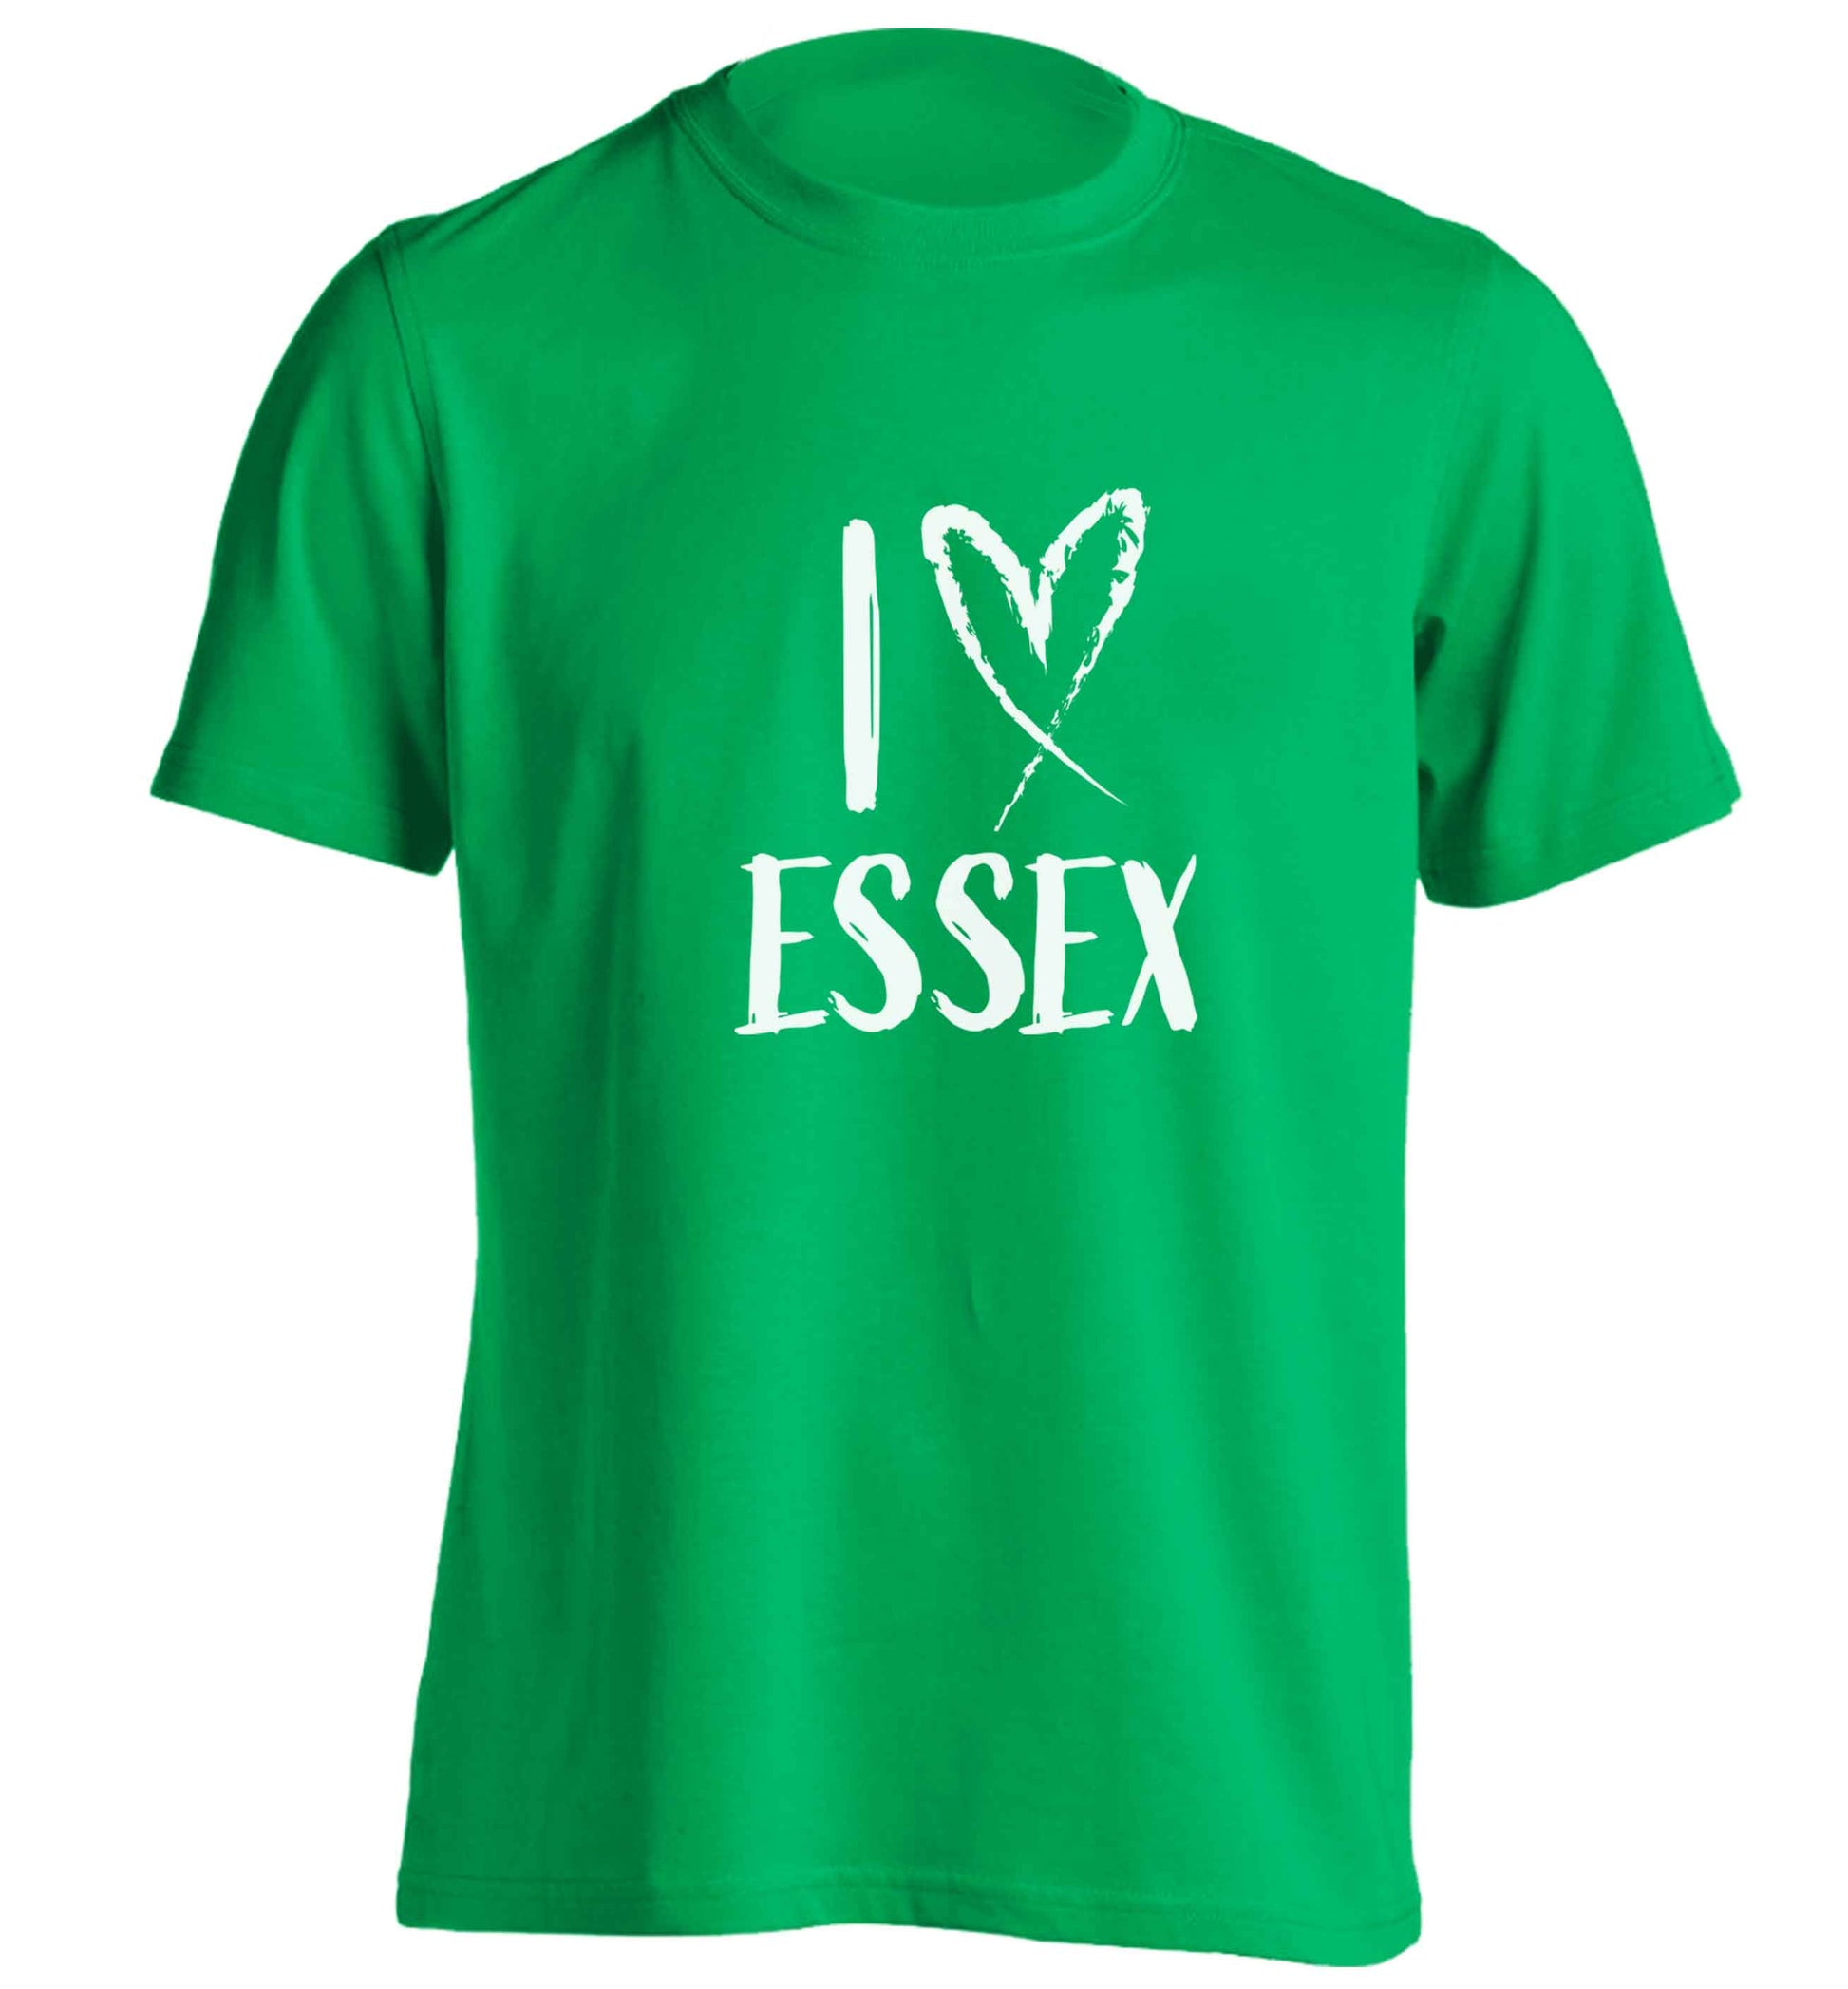 I love Essex adults unisex green Tshirt 2XL